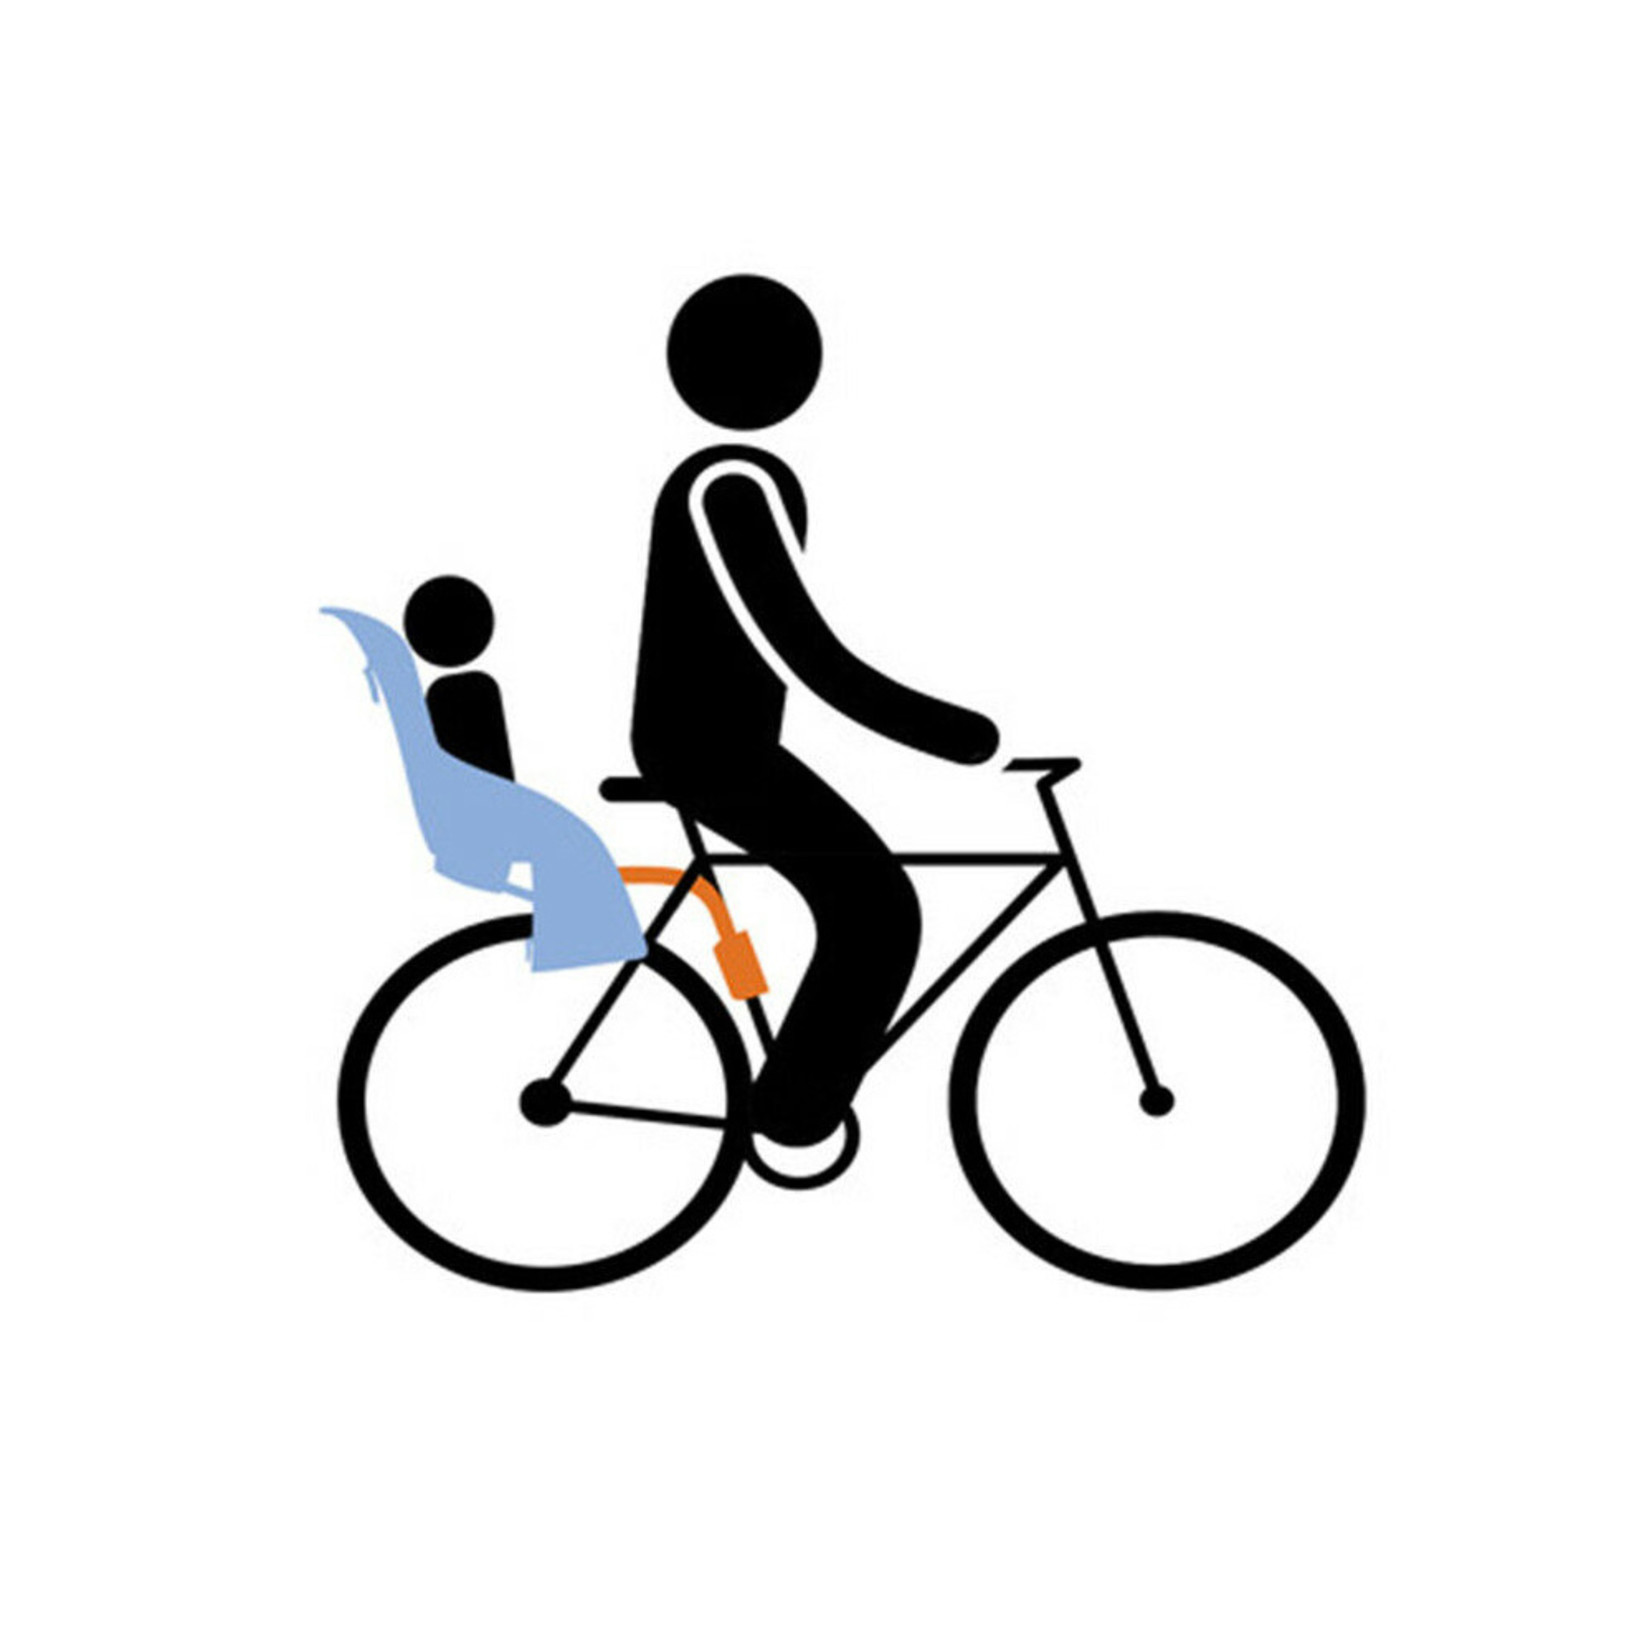 Thule Thule Yepp Maxi Frame Mounted Rear Child Bike Seat 12020237 - White